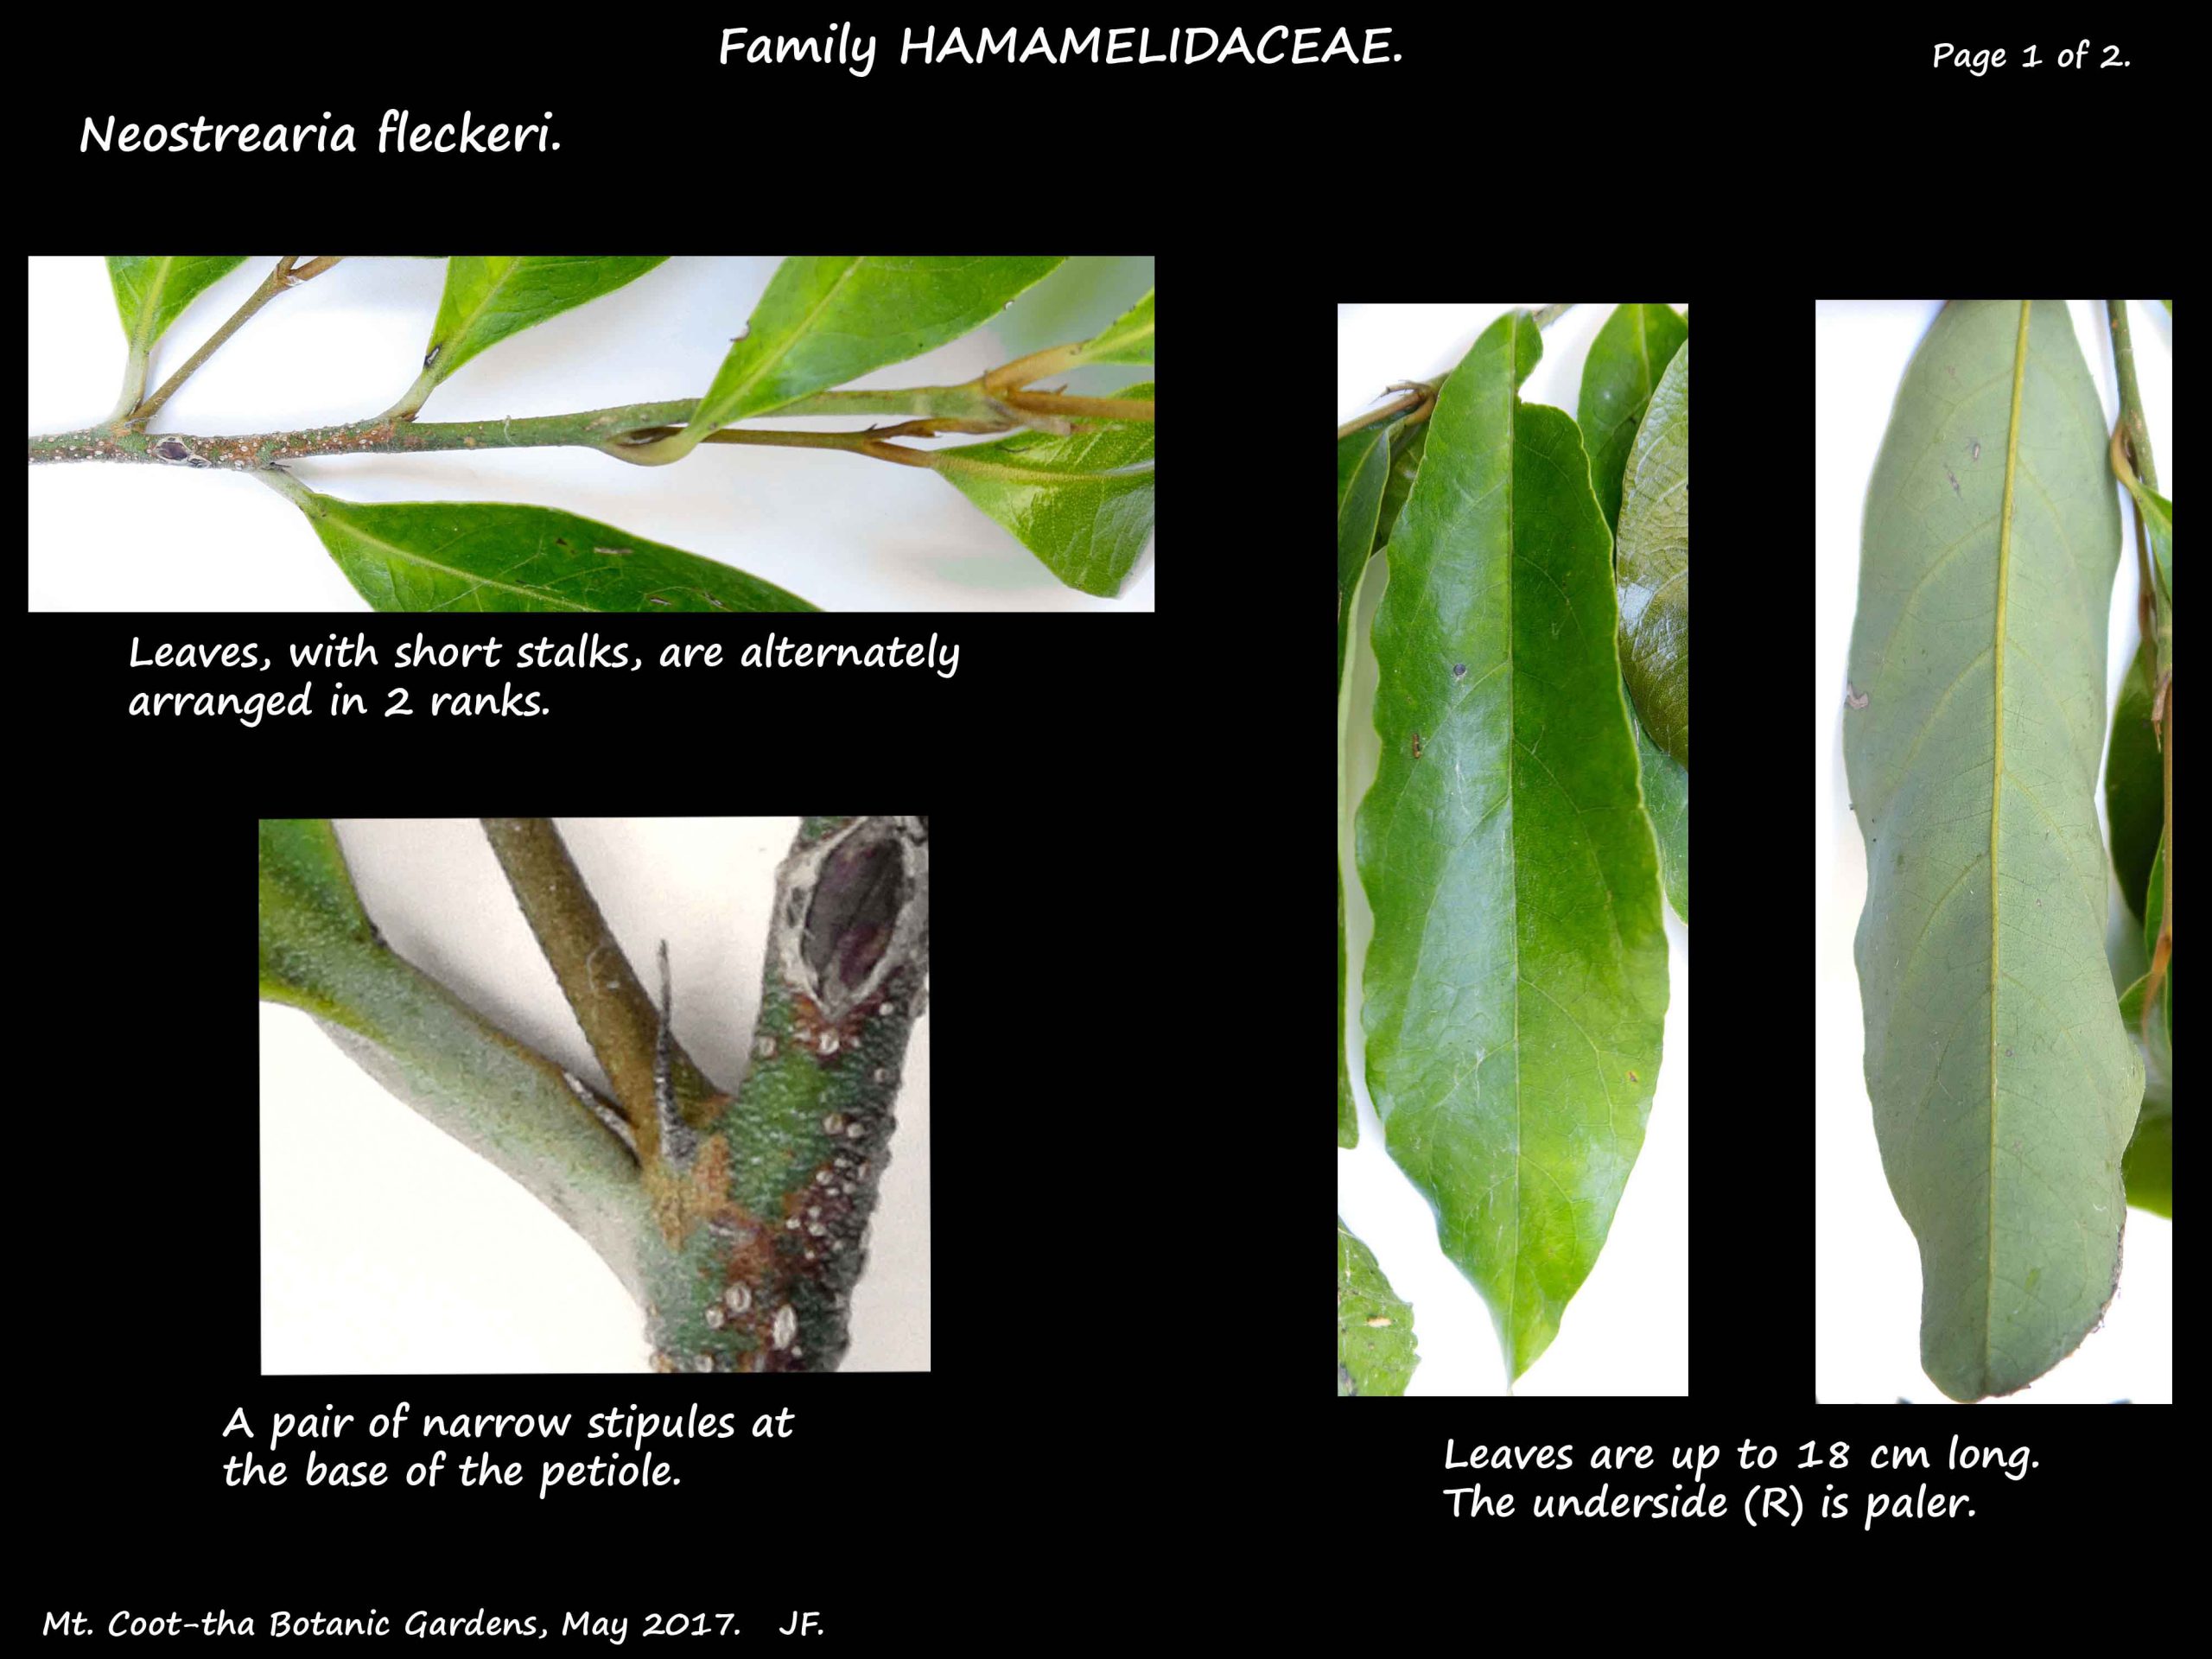 1 Neostrearia fleckeri leaves